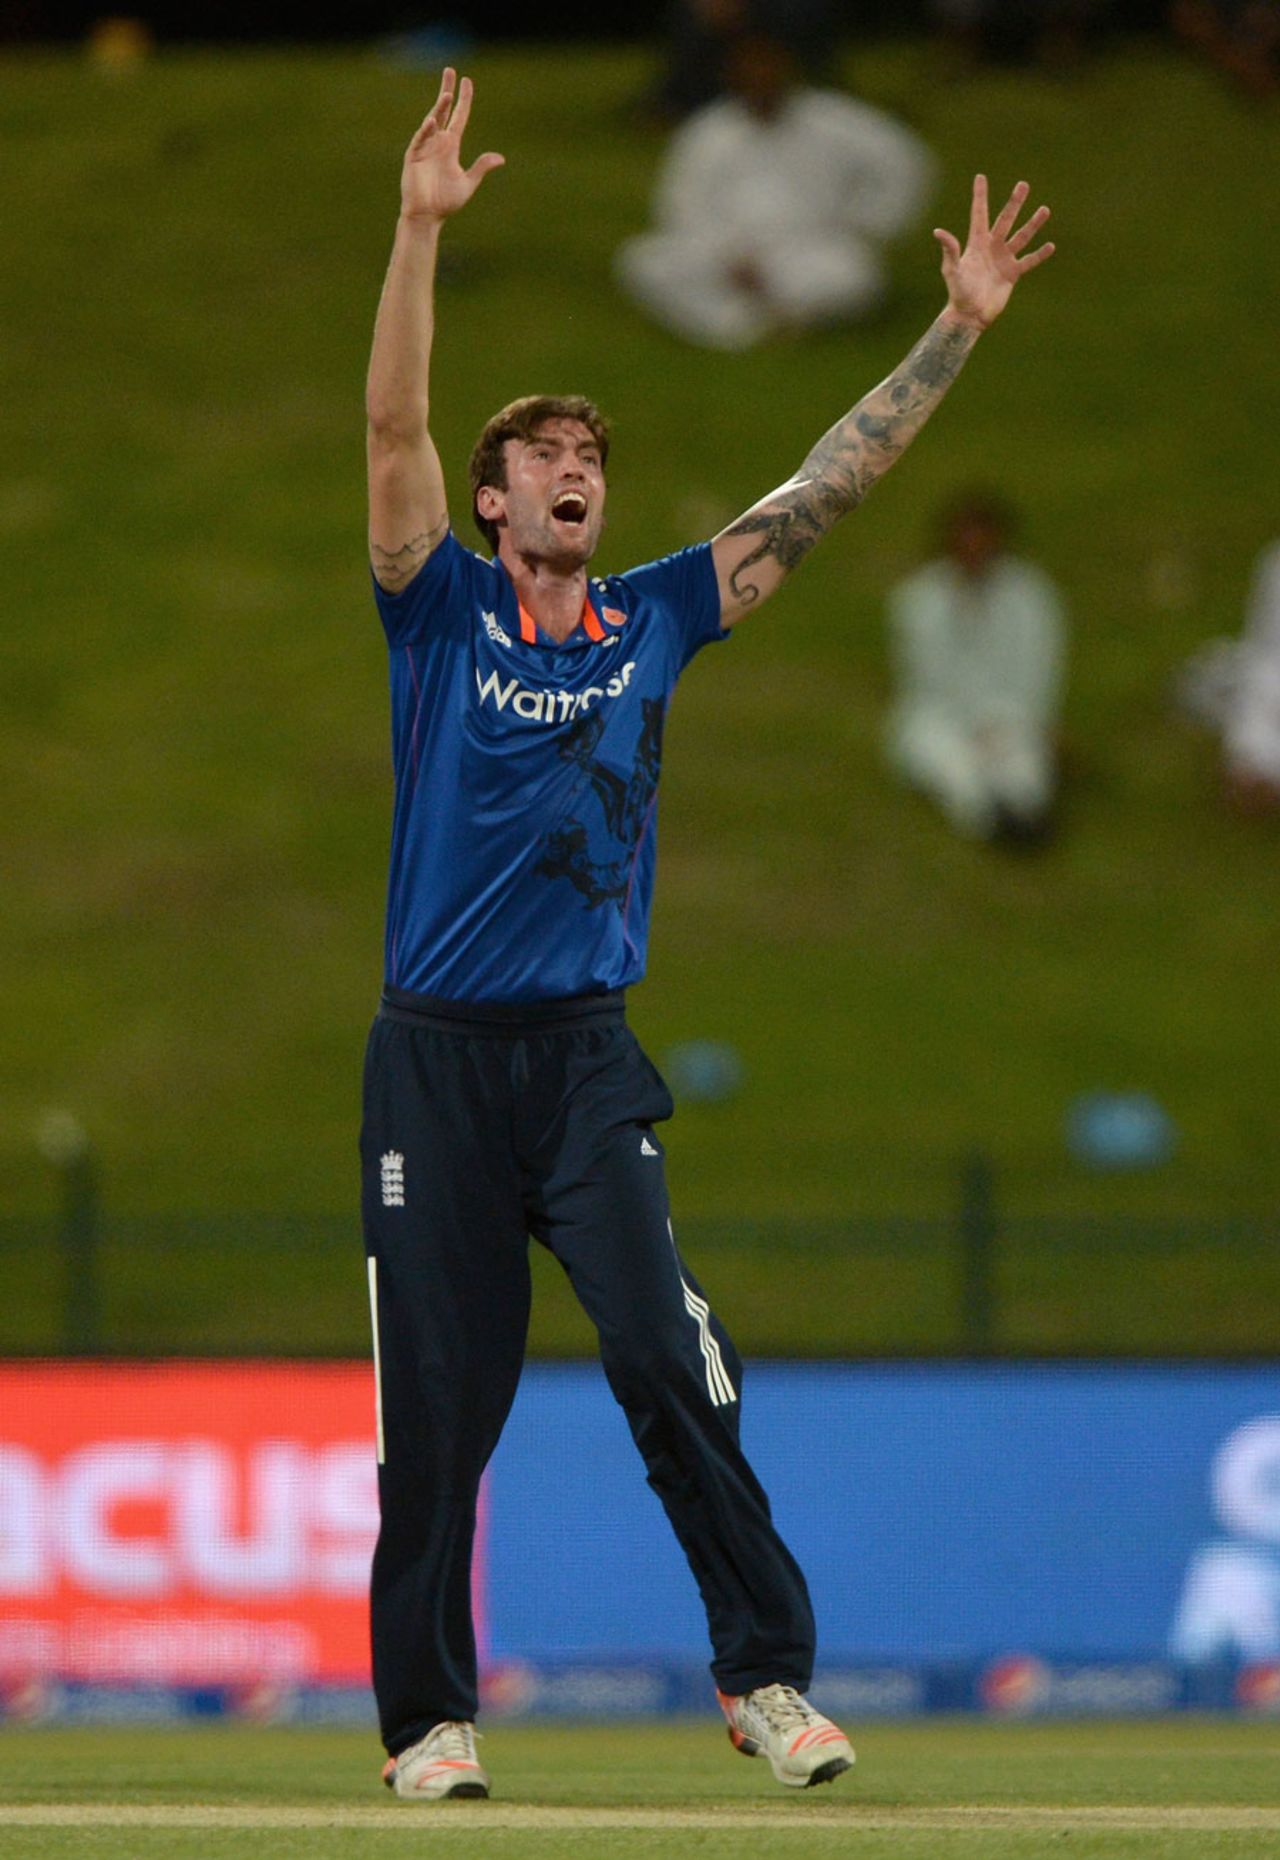 Reece Topley struck twice early on in the chase, Pakistan v England, 1st ODI, Abu Dhabi, November 11, 2015